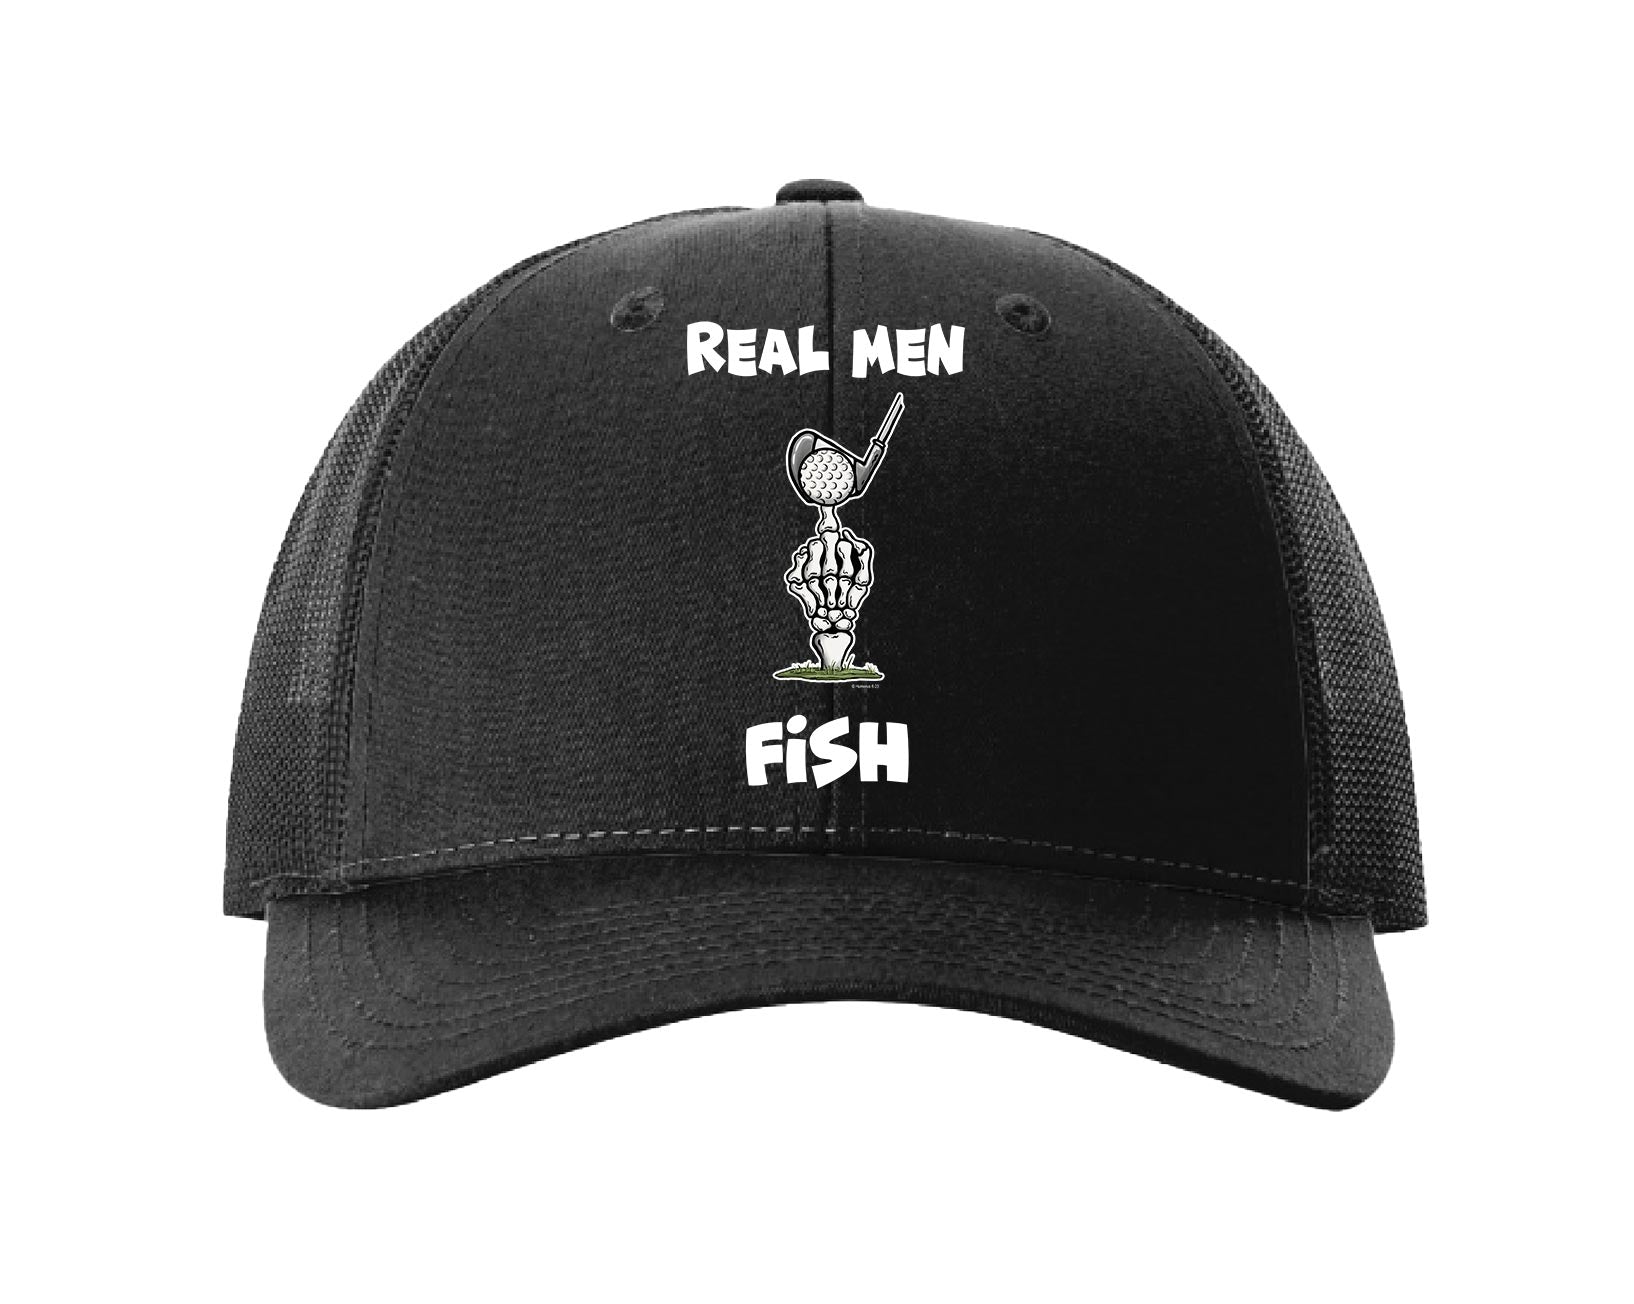 Real Men Fish - Low Profile Trucker Hat